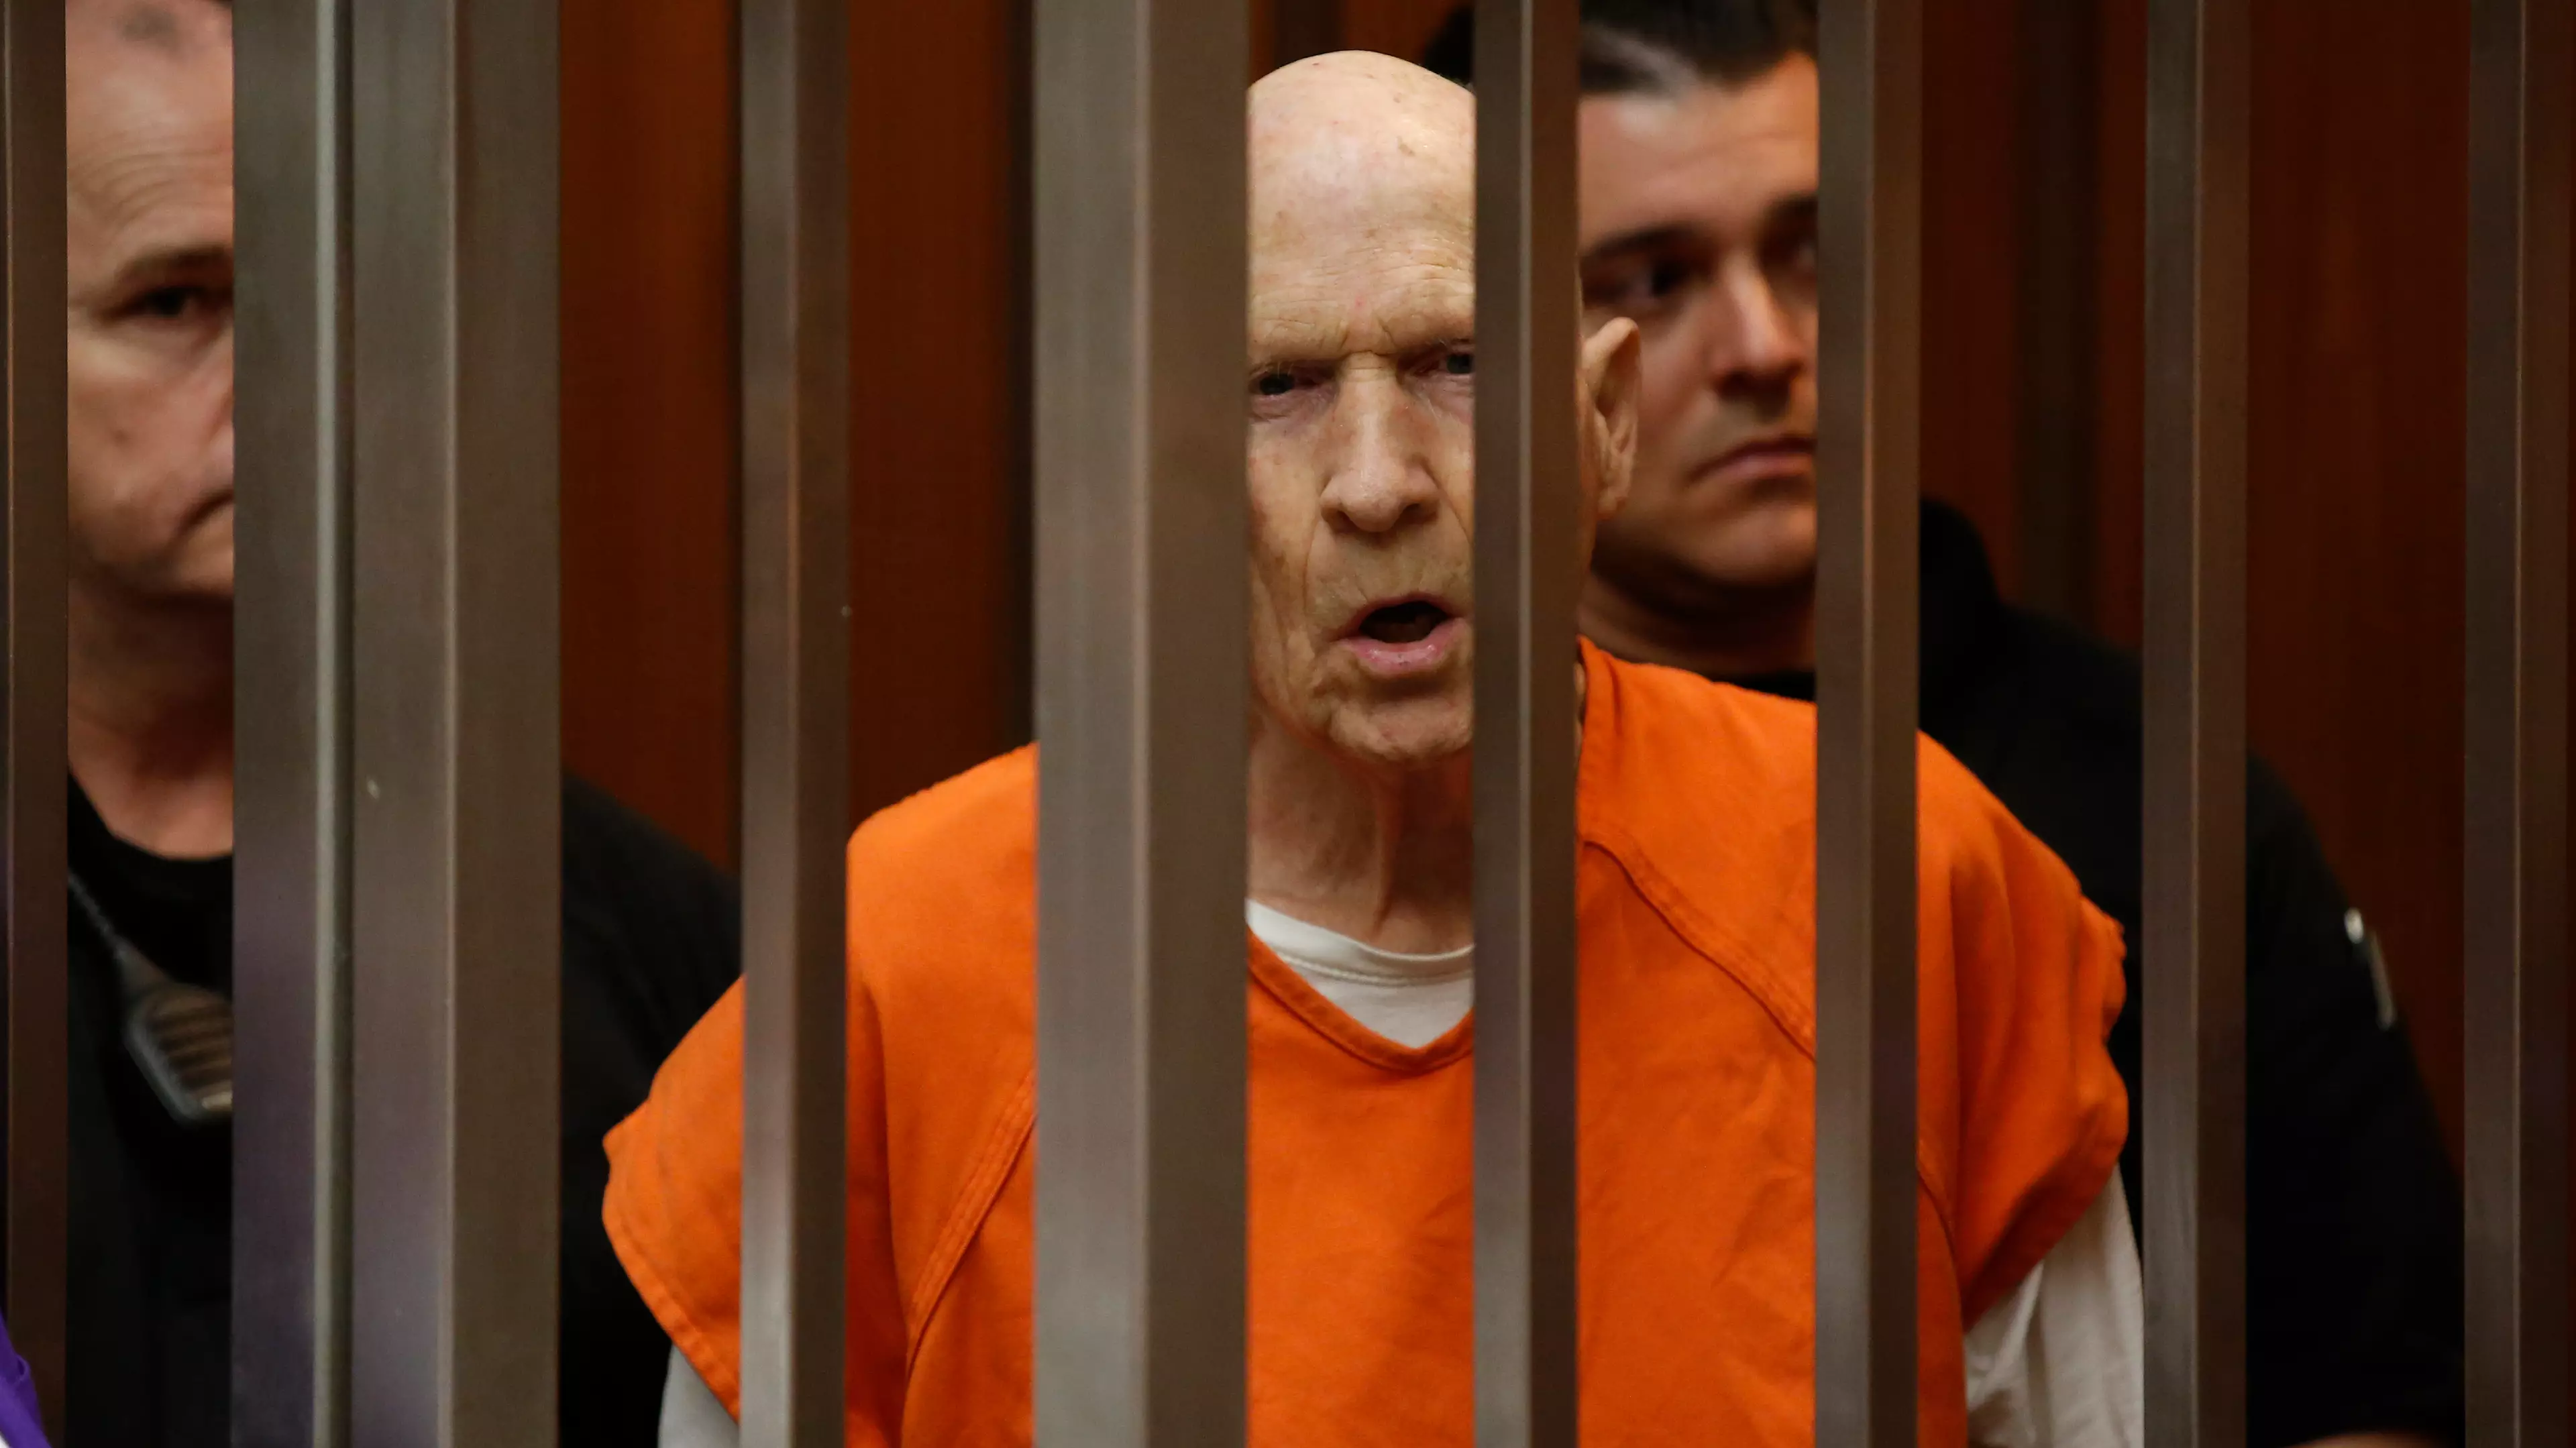 ‘I’ll Be Gone In The Dark’: Golden State Killer, Joseph James DeAngelo, Admits To 13 Murders